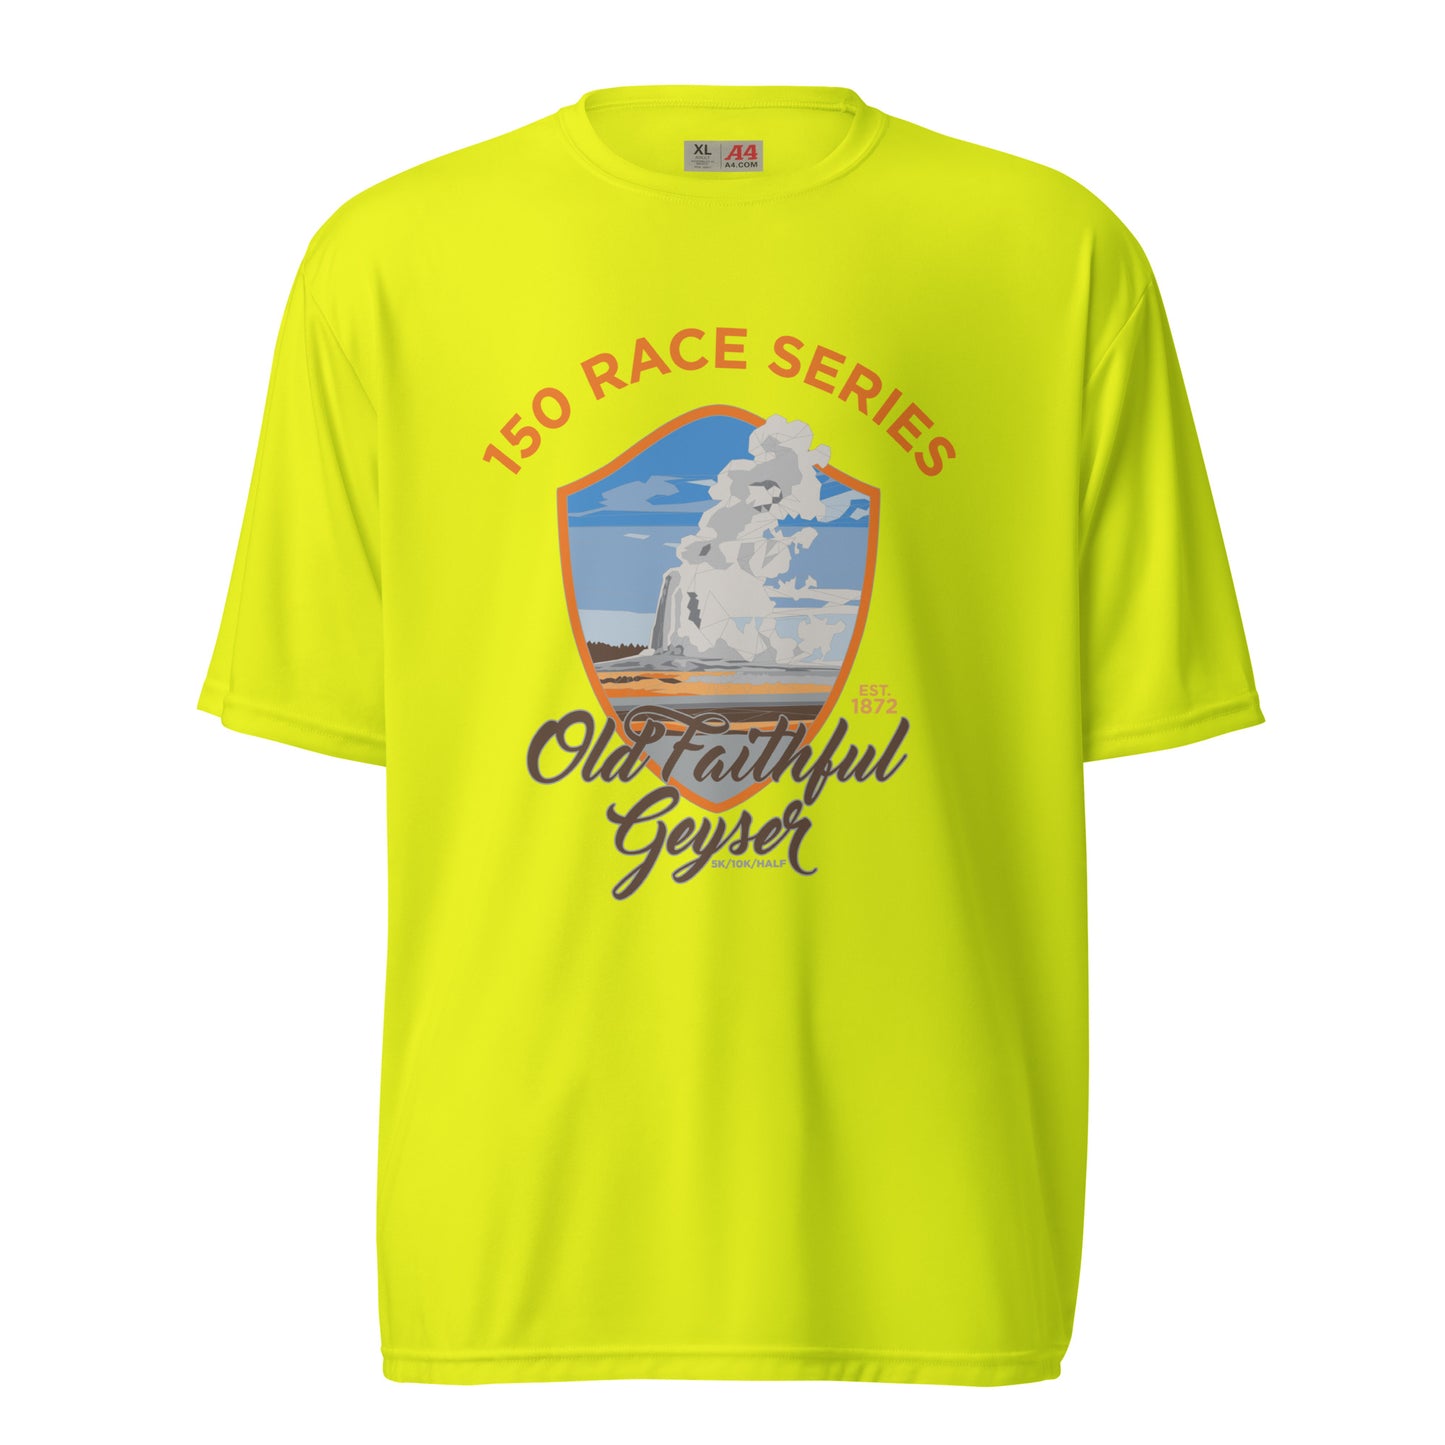 Performance Athletic Old Faithful Geyser Race Tee - 150 Years of Yellowstone